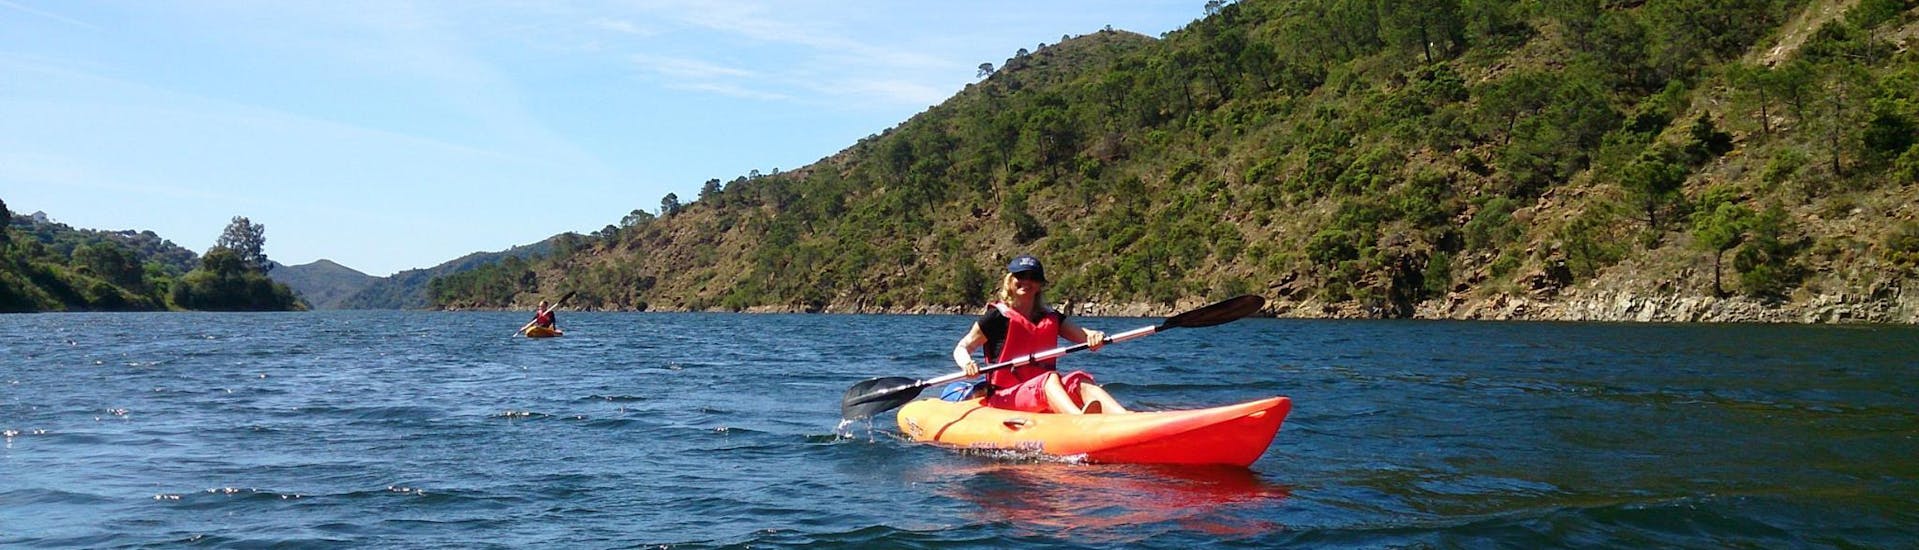 Leichte Kayak & Kanu-Tour in Istán - Sierra de las Nieves.